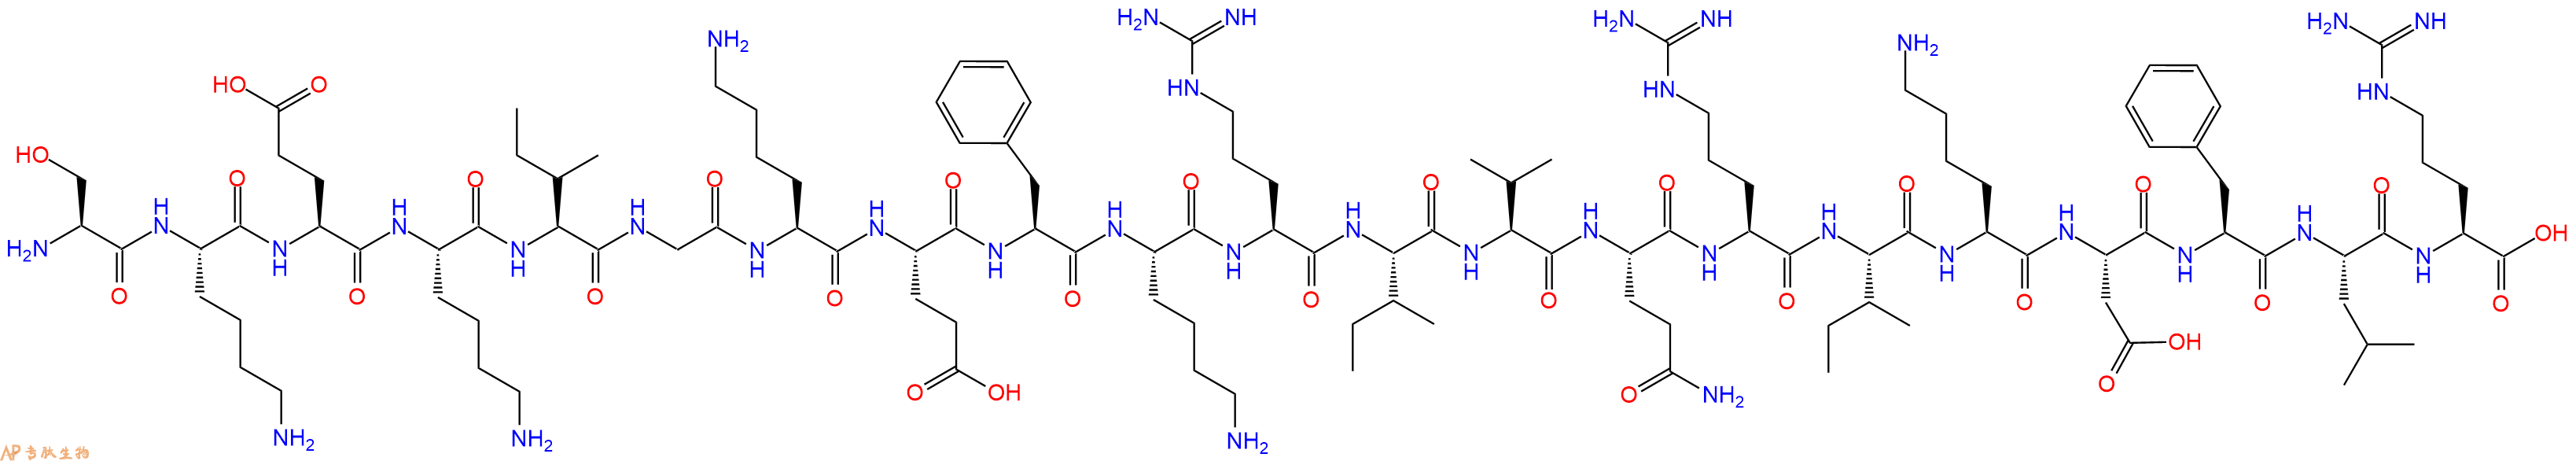 多肽生物产品LL-37 SKE1072128-56-3